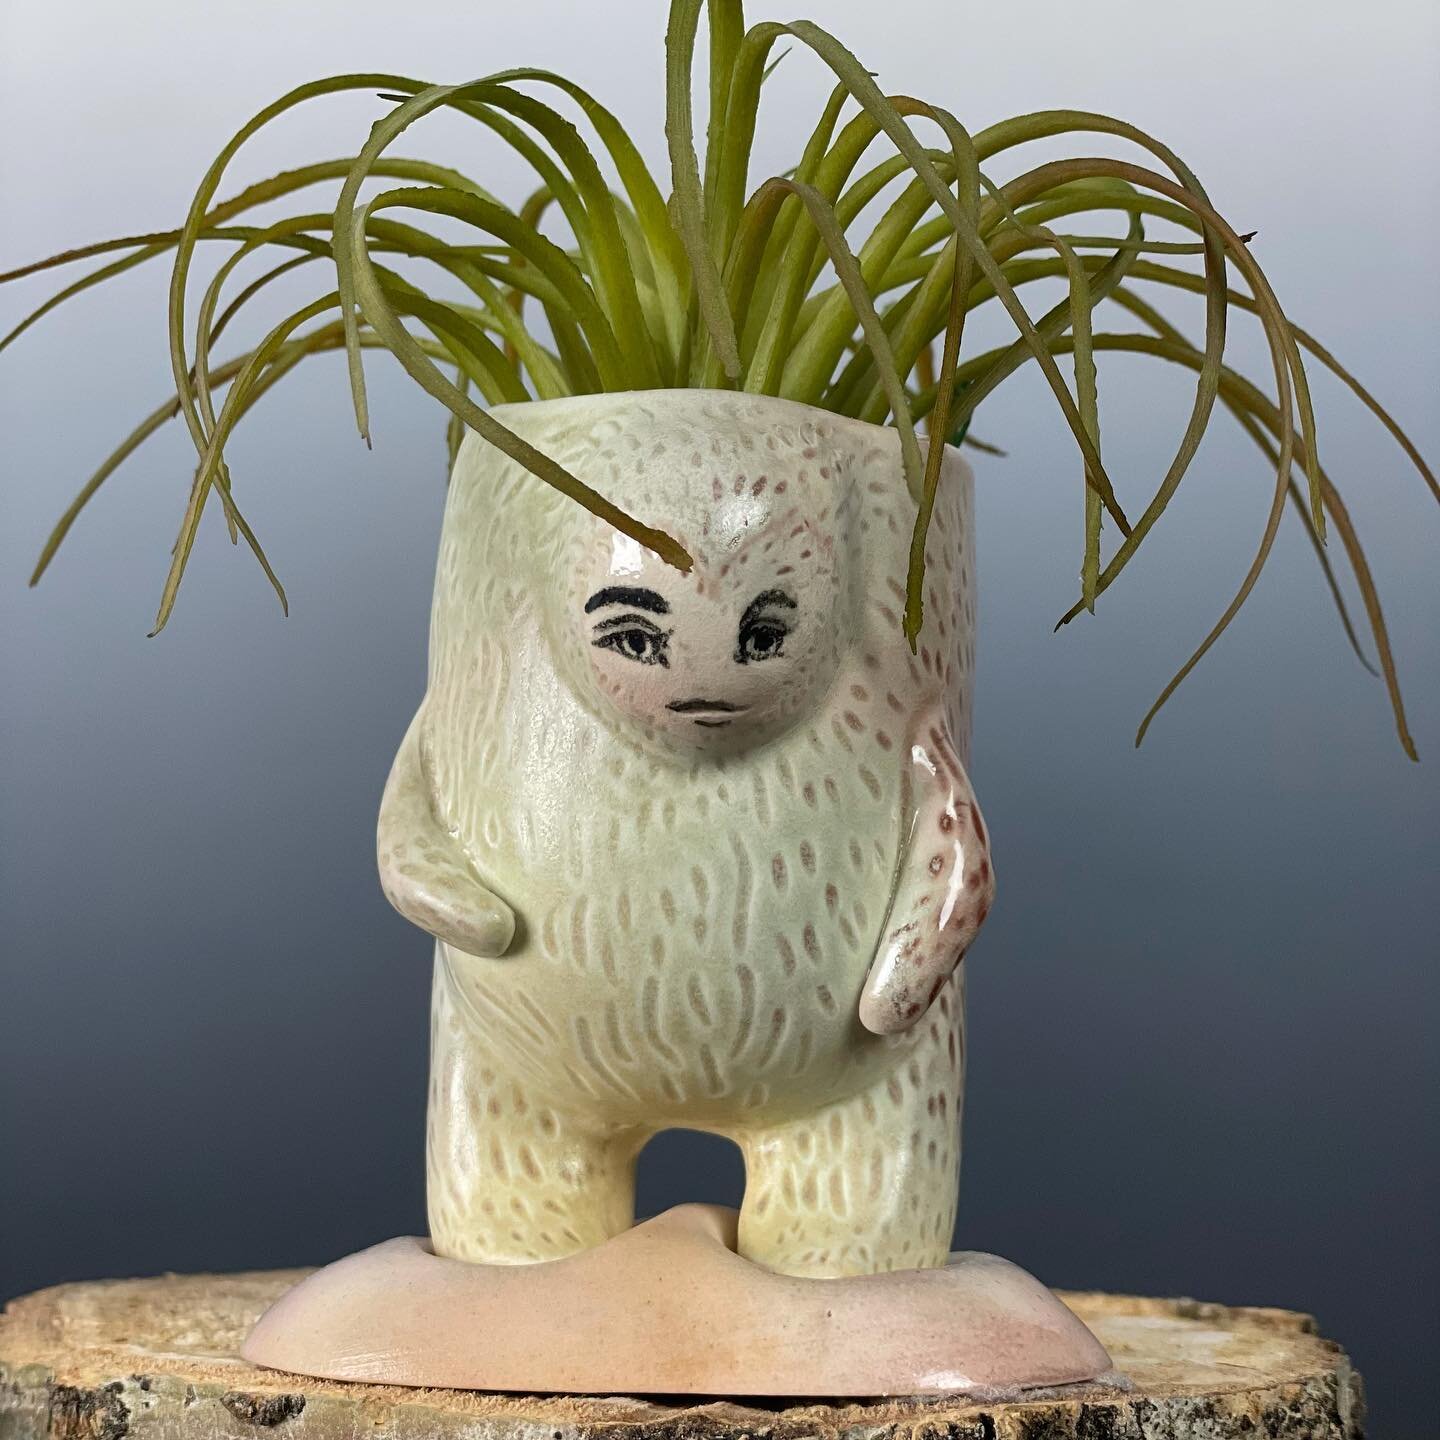 Just a little porcelain salt fired guy with a spearmint glaze 🌿available in my web-shop.  Link in my bio!#saltfired #porcelain #creature #tinysculpture #handmade #planters #plantparenthood #succulents #ceramicart